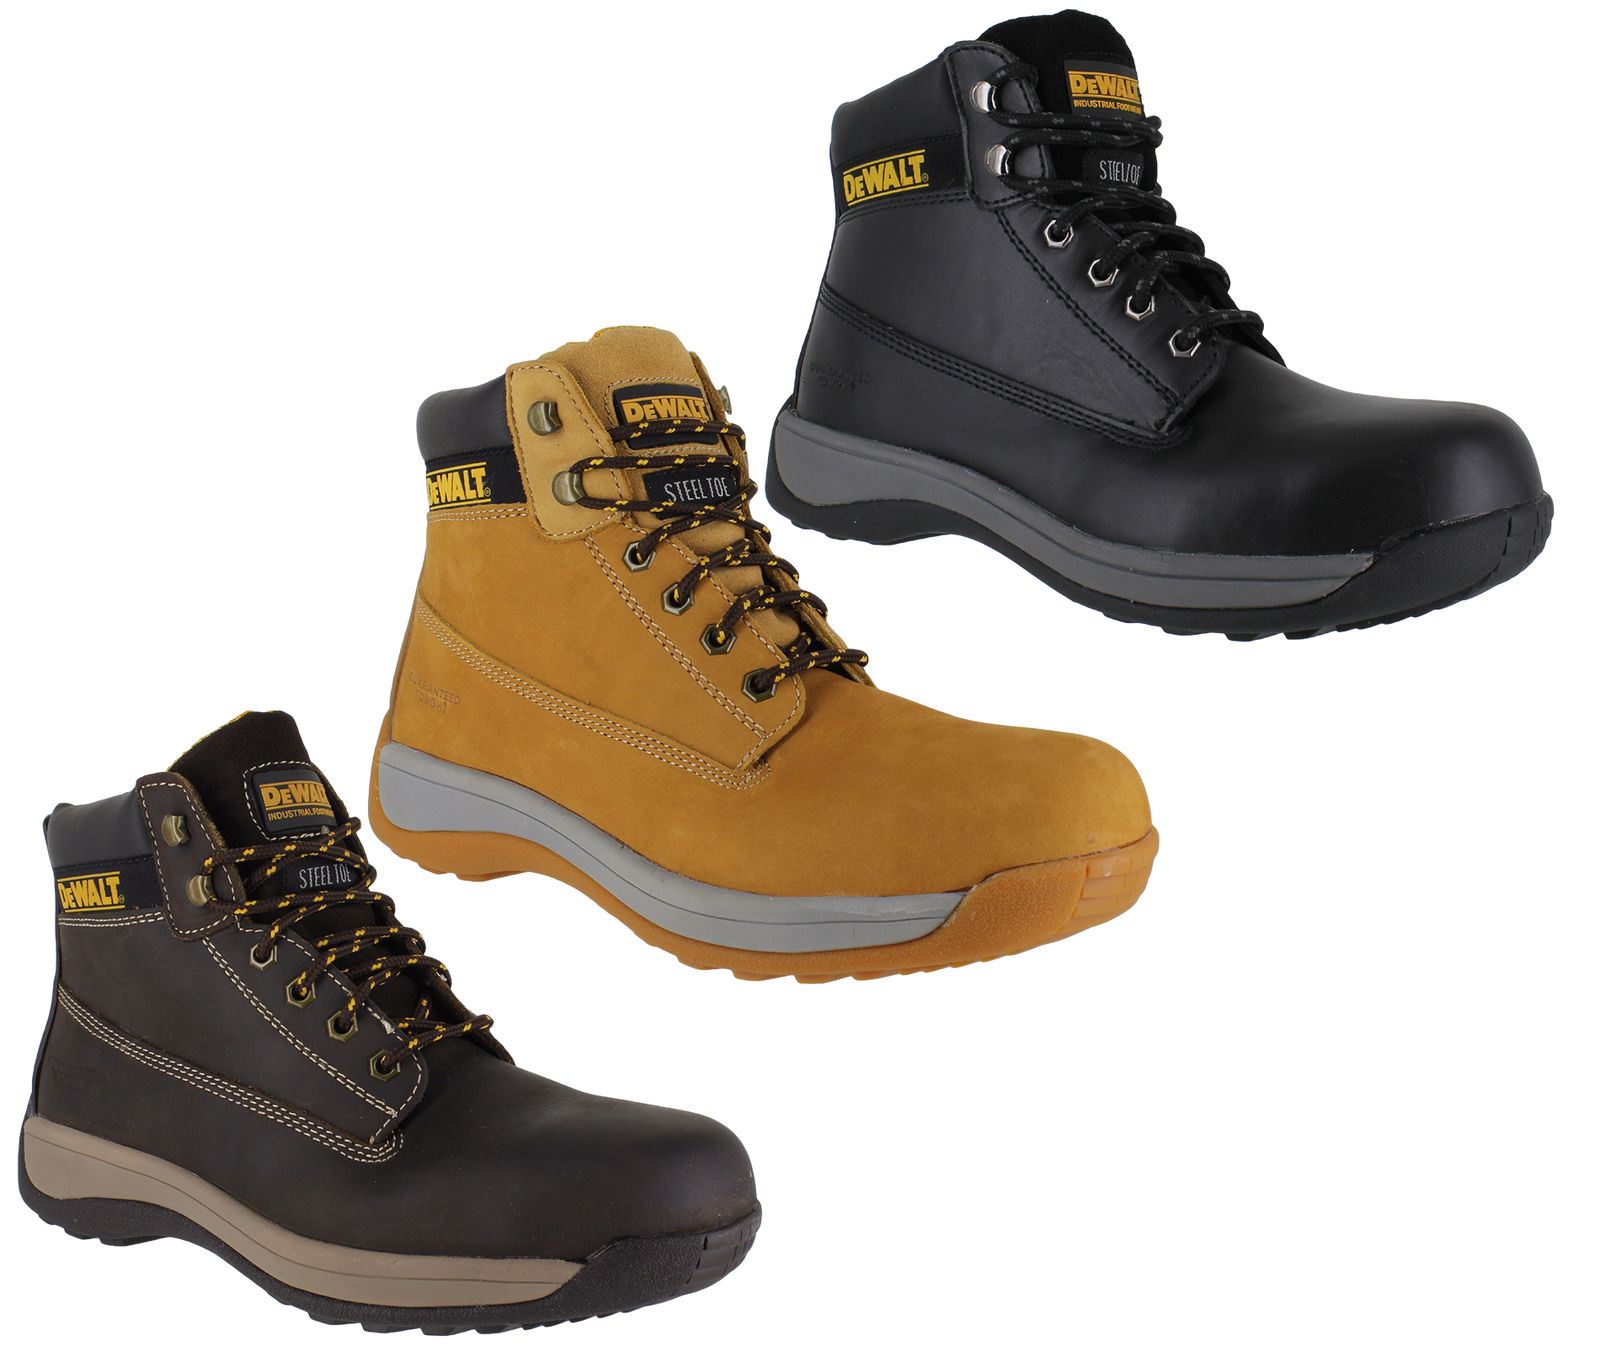 Dewalt Apprentice safety boots